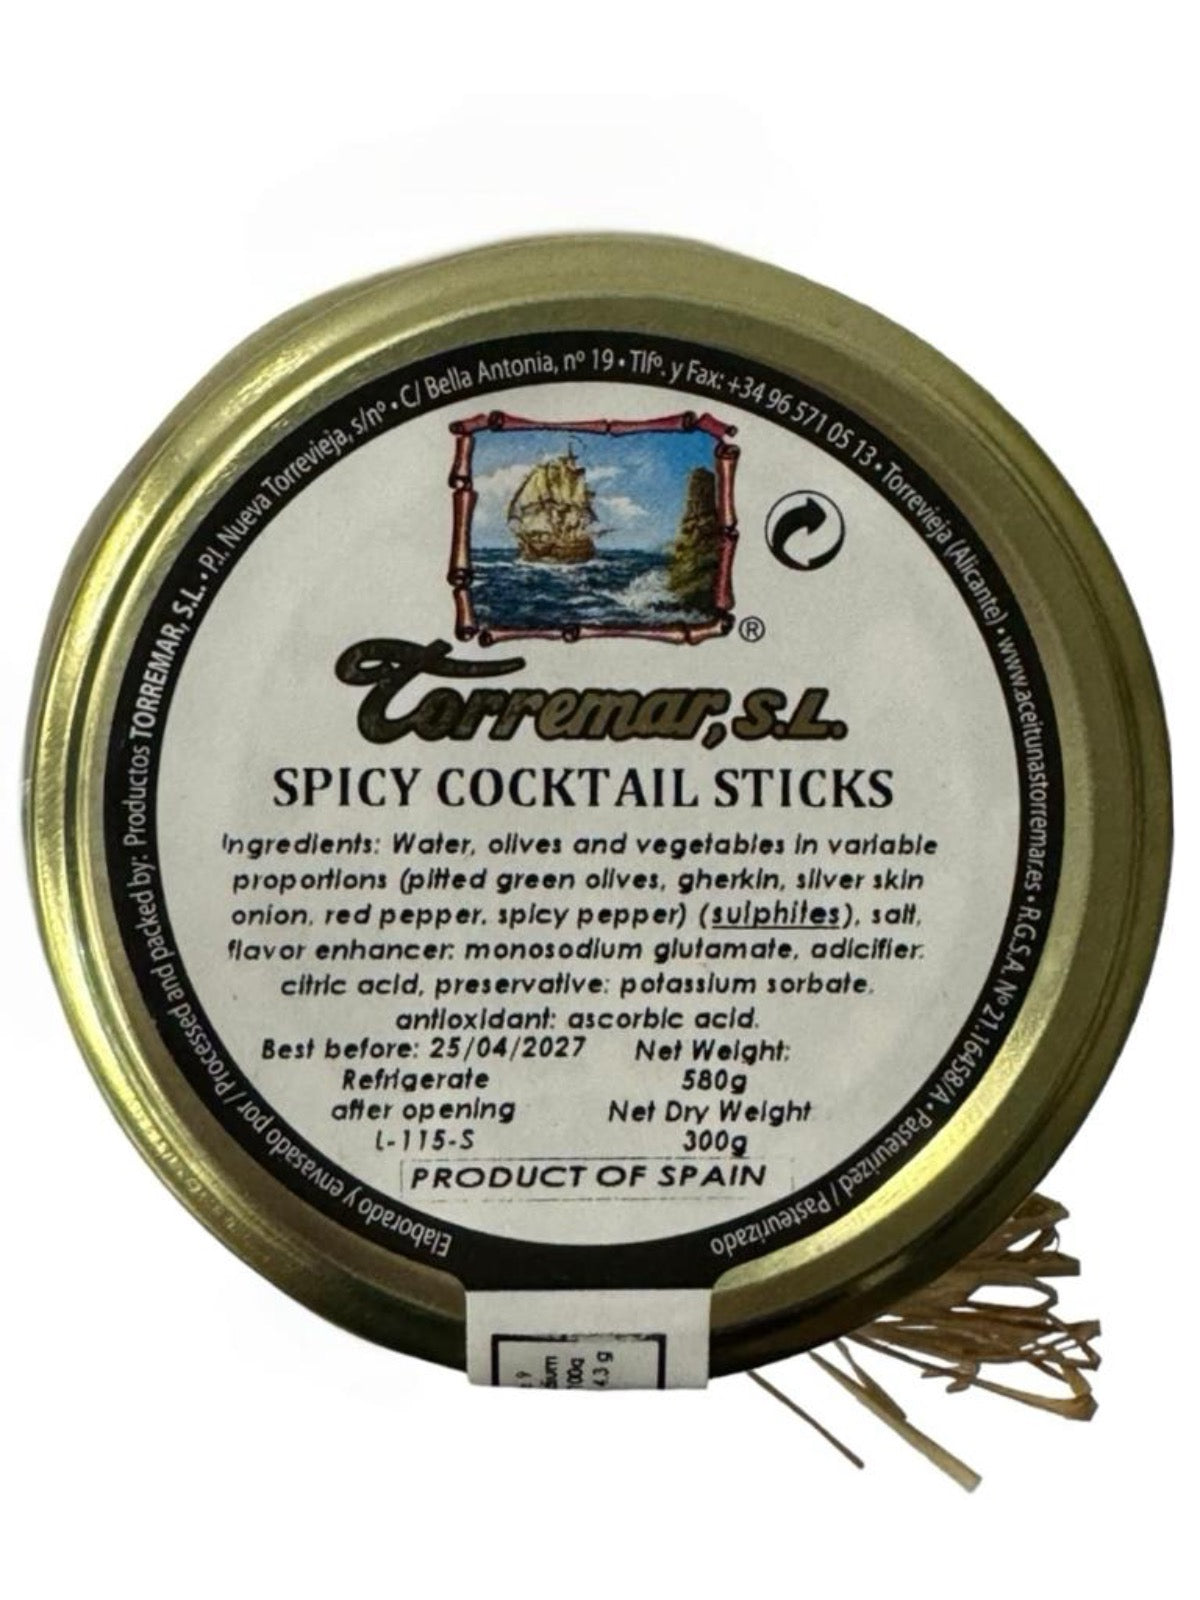 Torremar Spanish Spicy Cocktail Sticks 580g Best Before April 2027